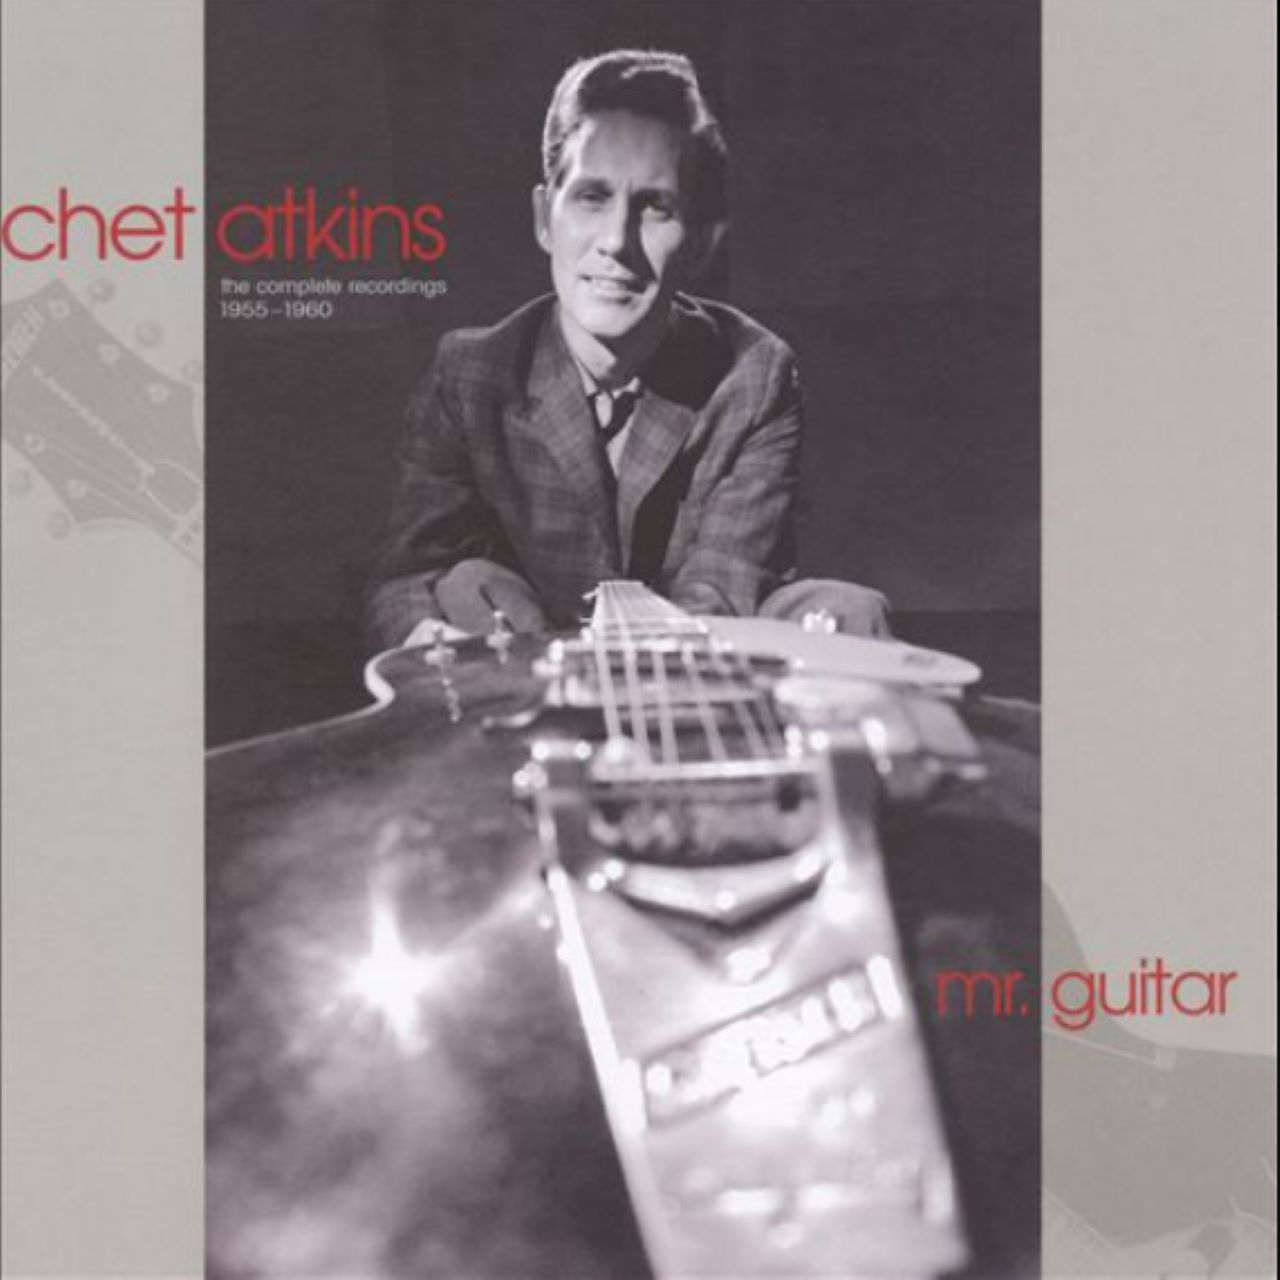 Chet Atkins - Mr. Guitar - The Complete Recordings 1955-1960 cover album